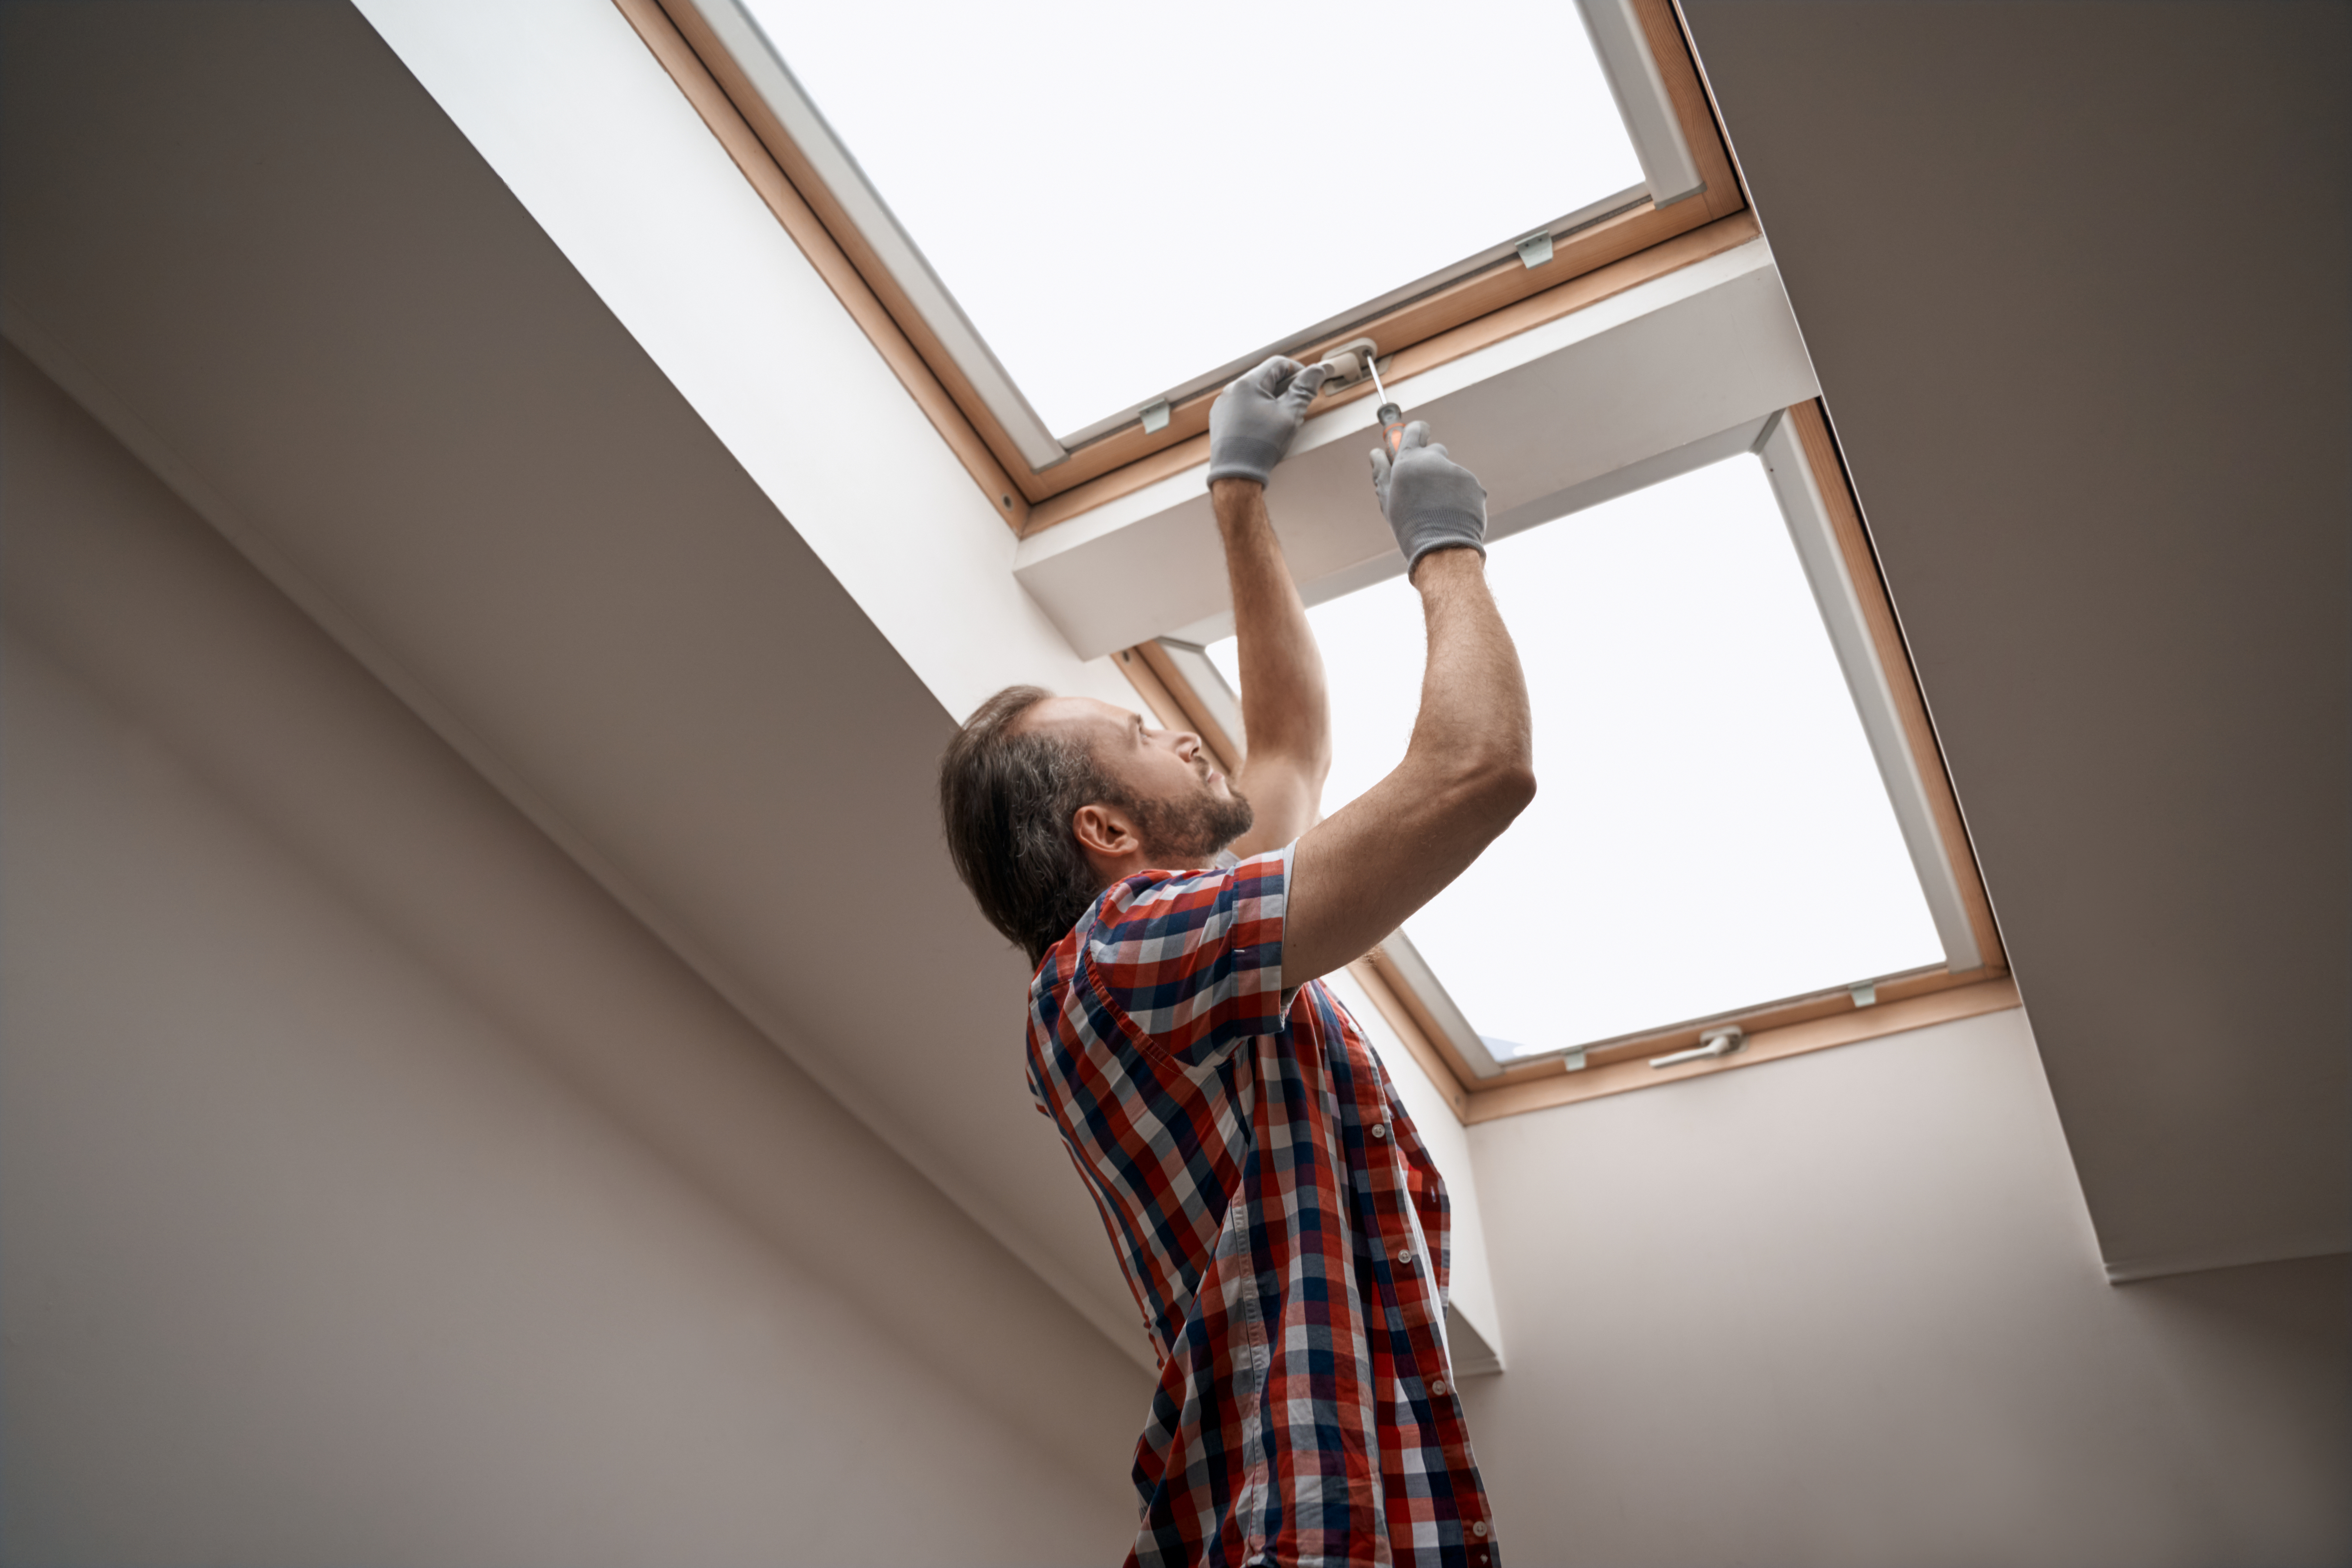 Young caucasian worker screwing skylight window handle